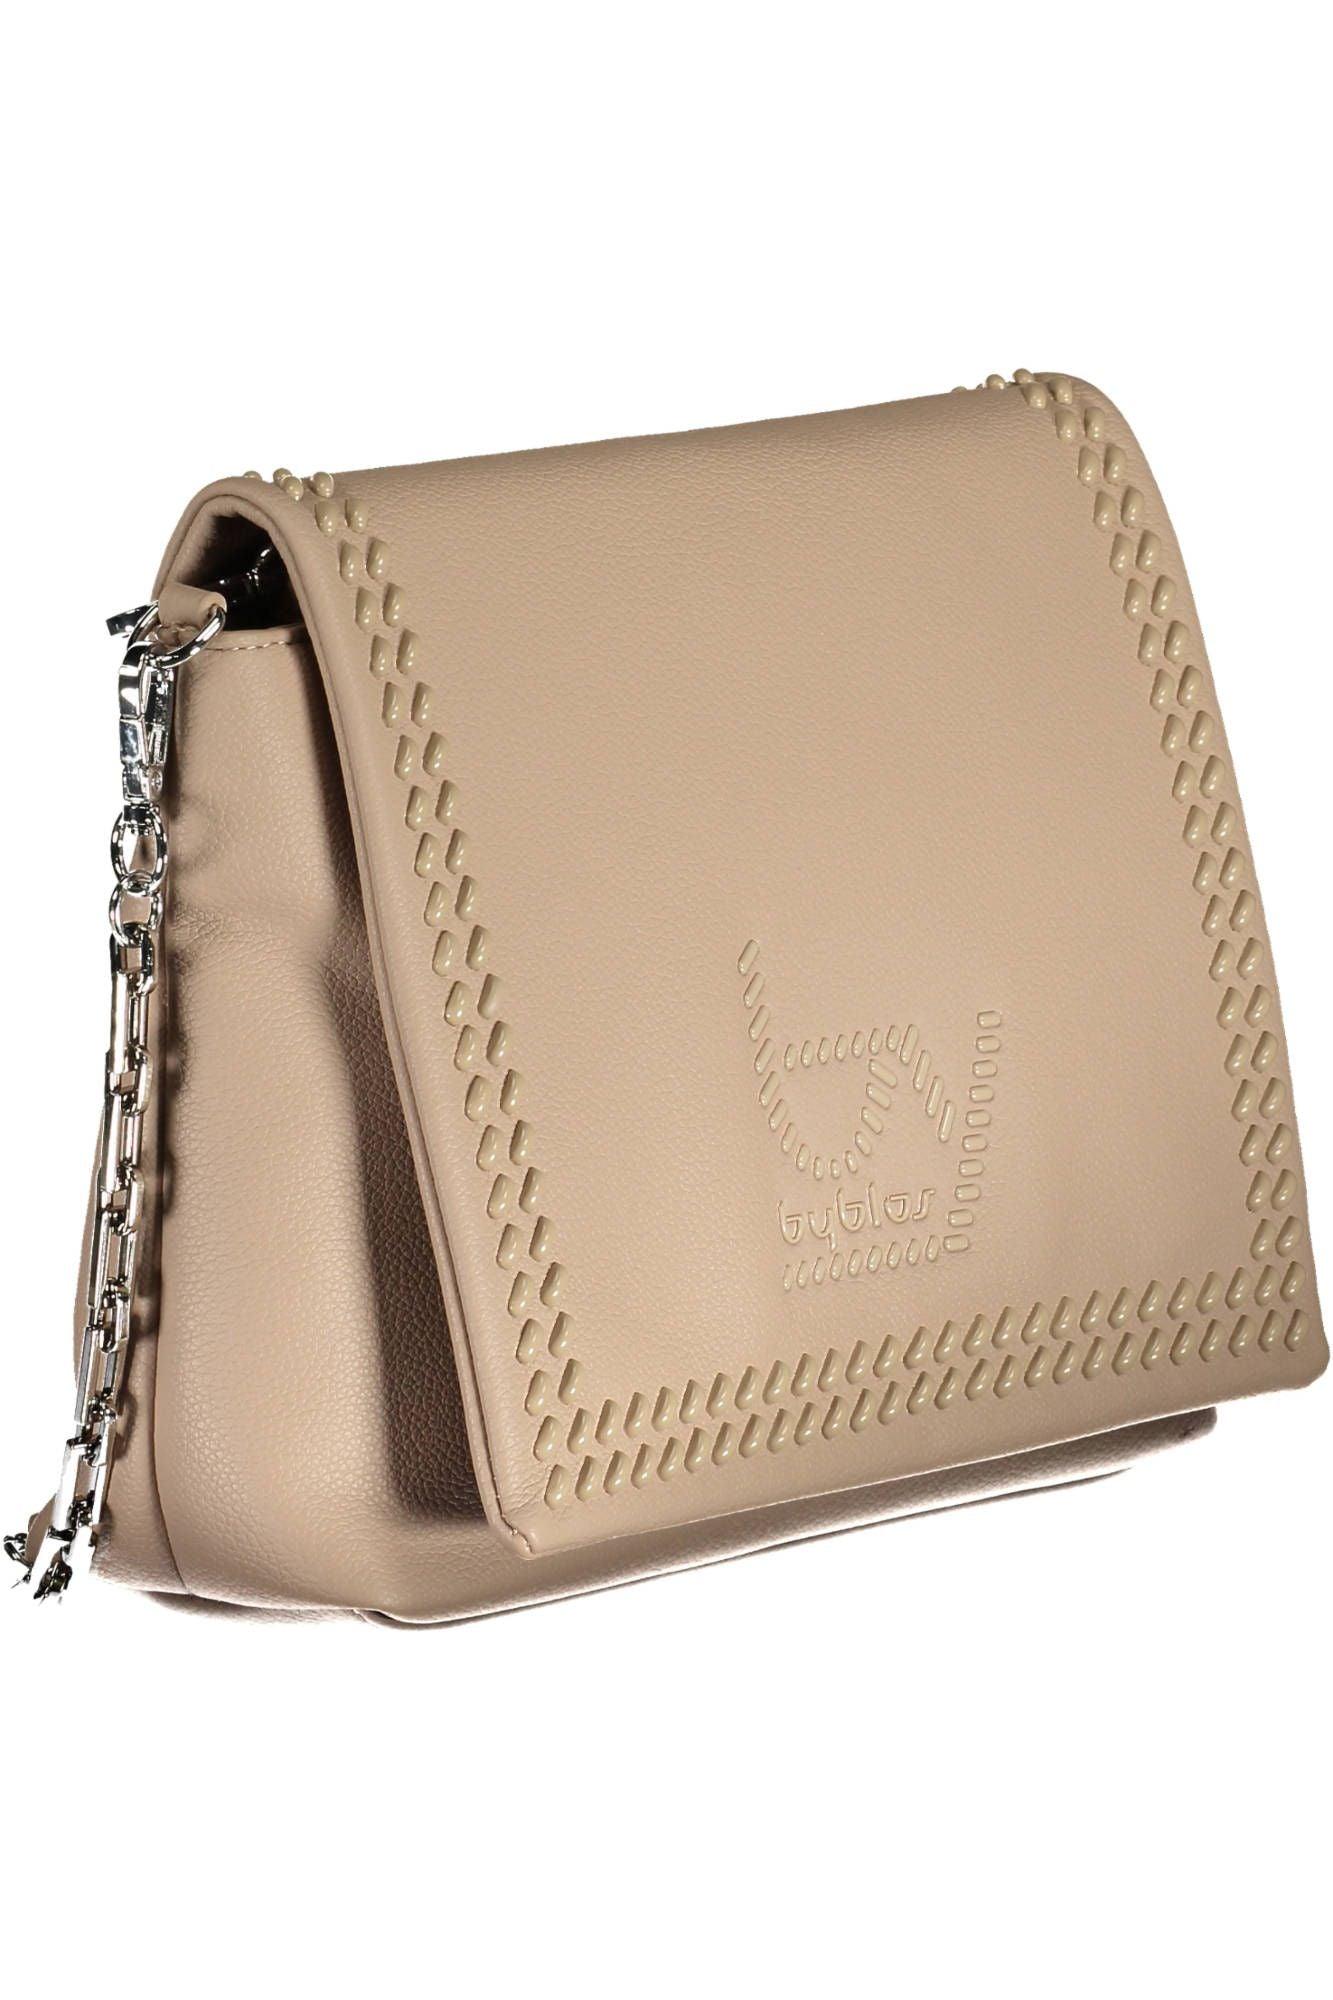 BYBLOS Beige Chain-Handle Shoulder Bag with Contrasting Details - PER.FASHION